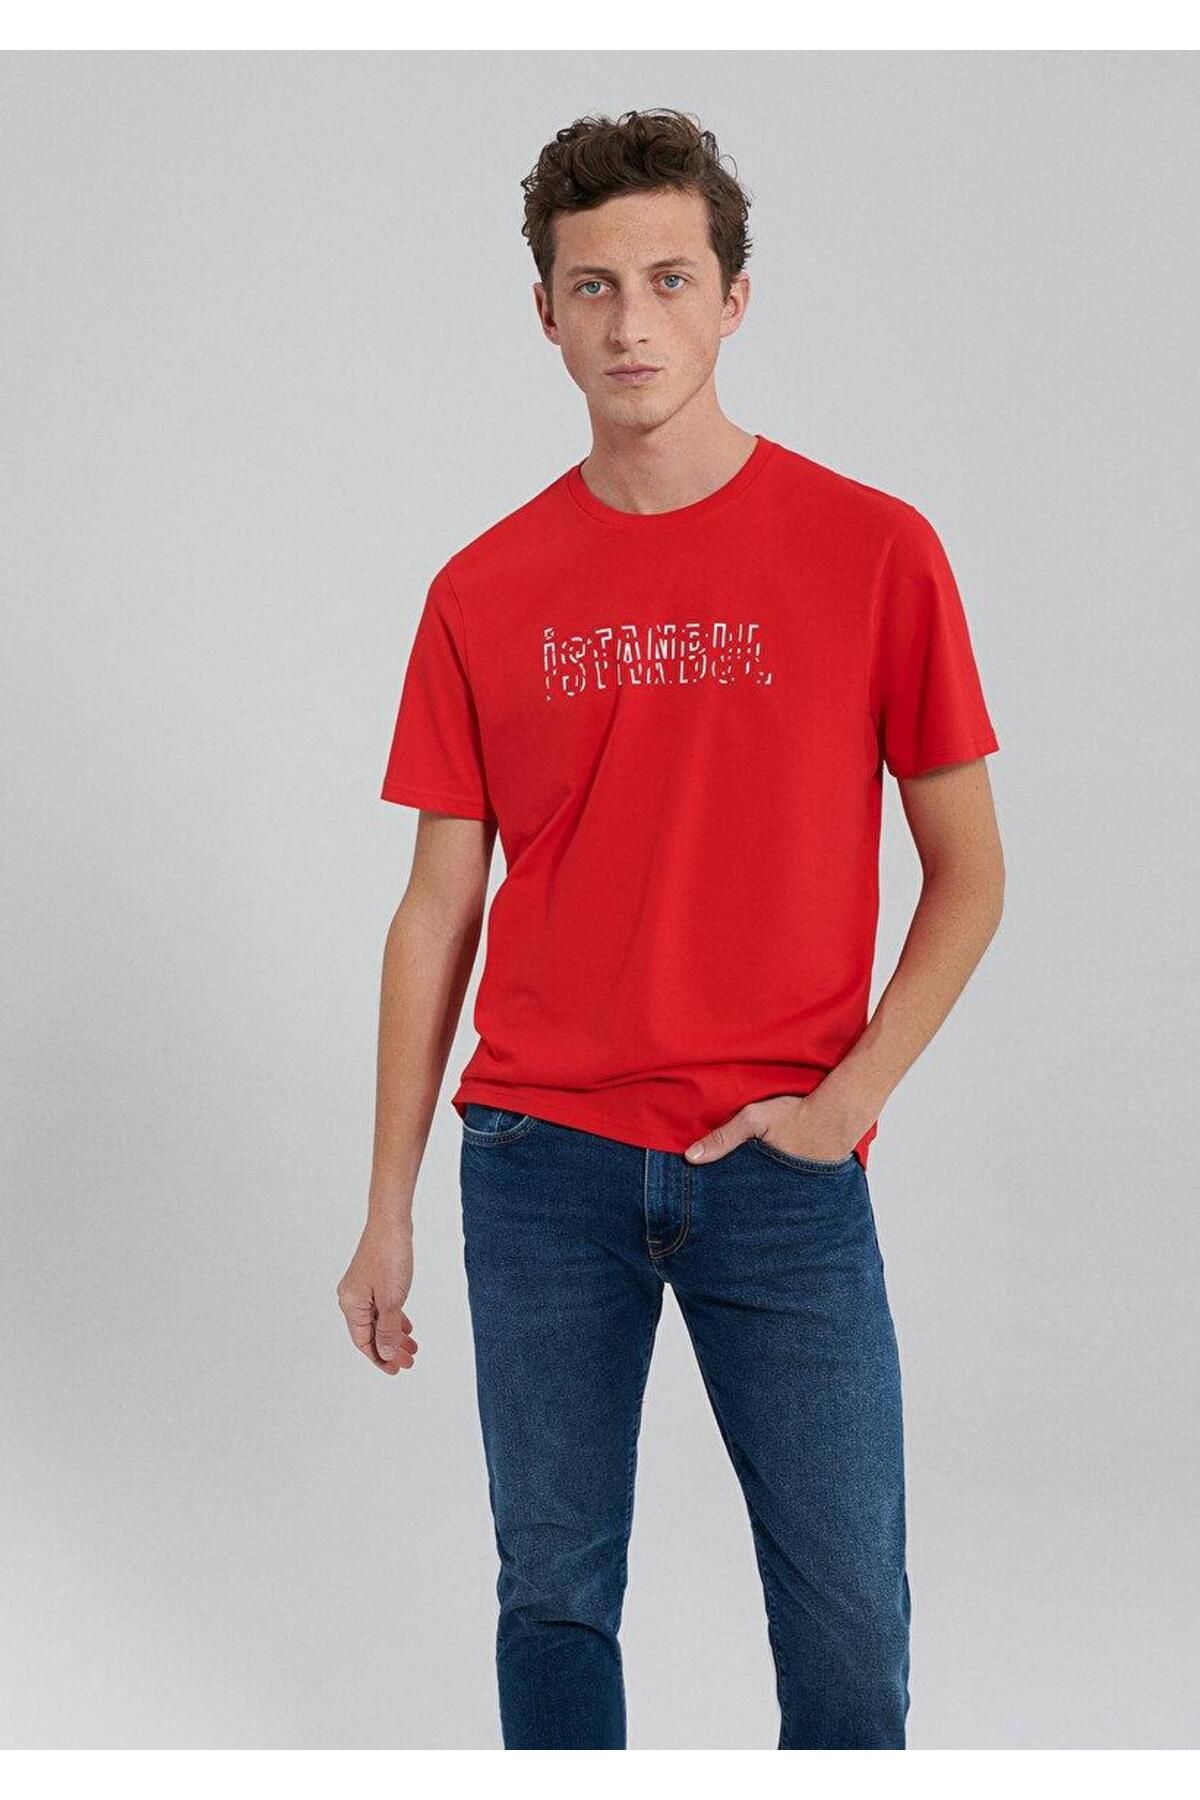 Mavi تی شرت چاپی استانبول مردان آبی قرمز 067115-70471